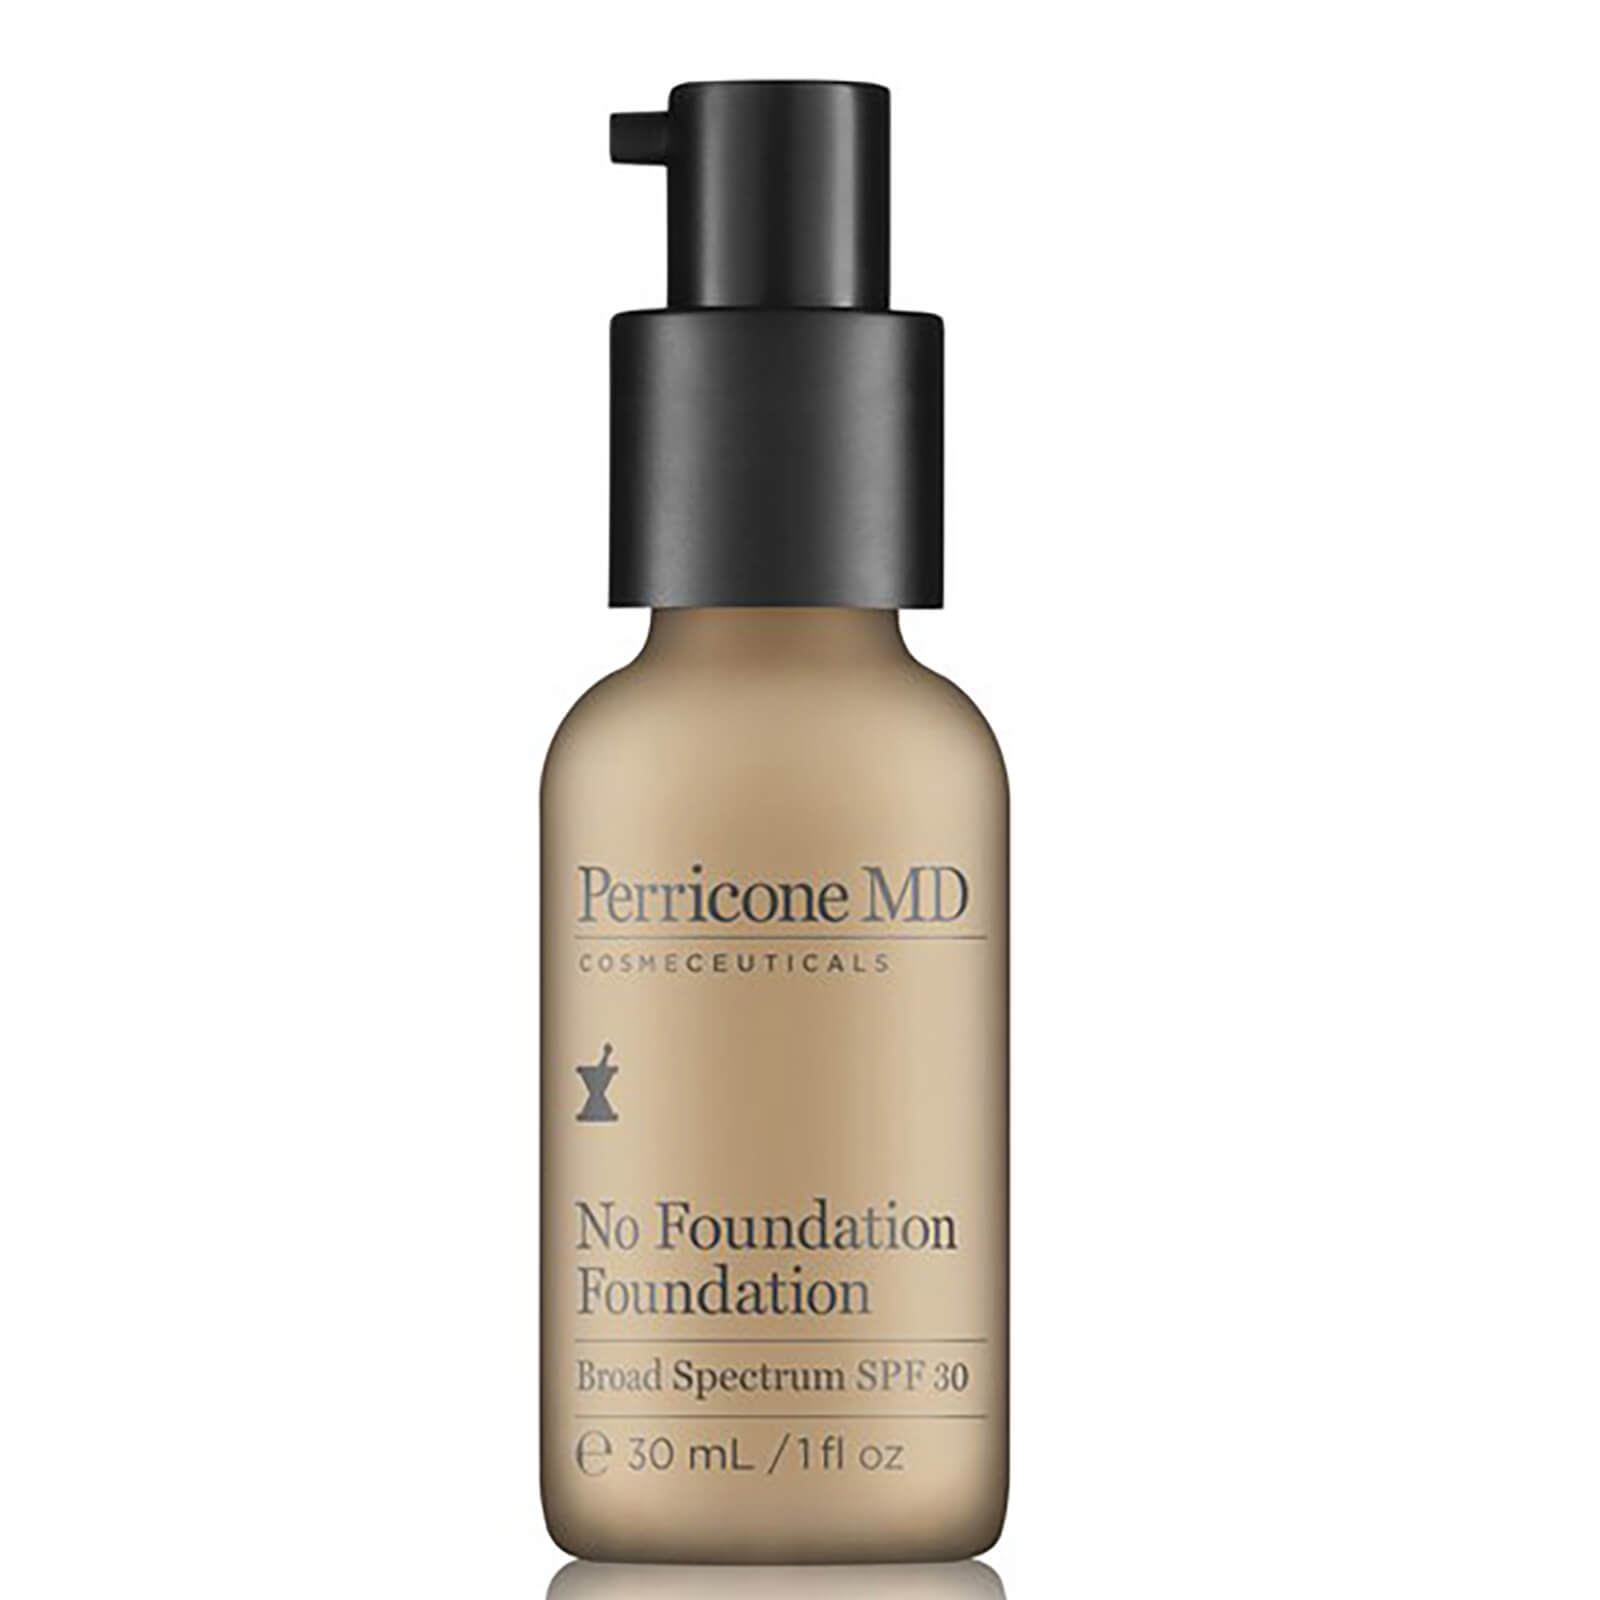 Maquillaje Perricone MD "No Foundation" No 2 - piel clara/mediana (30ml)